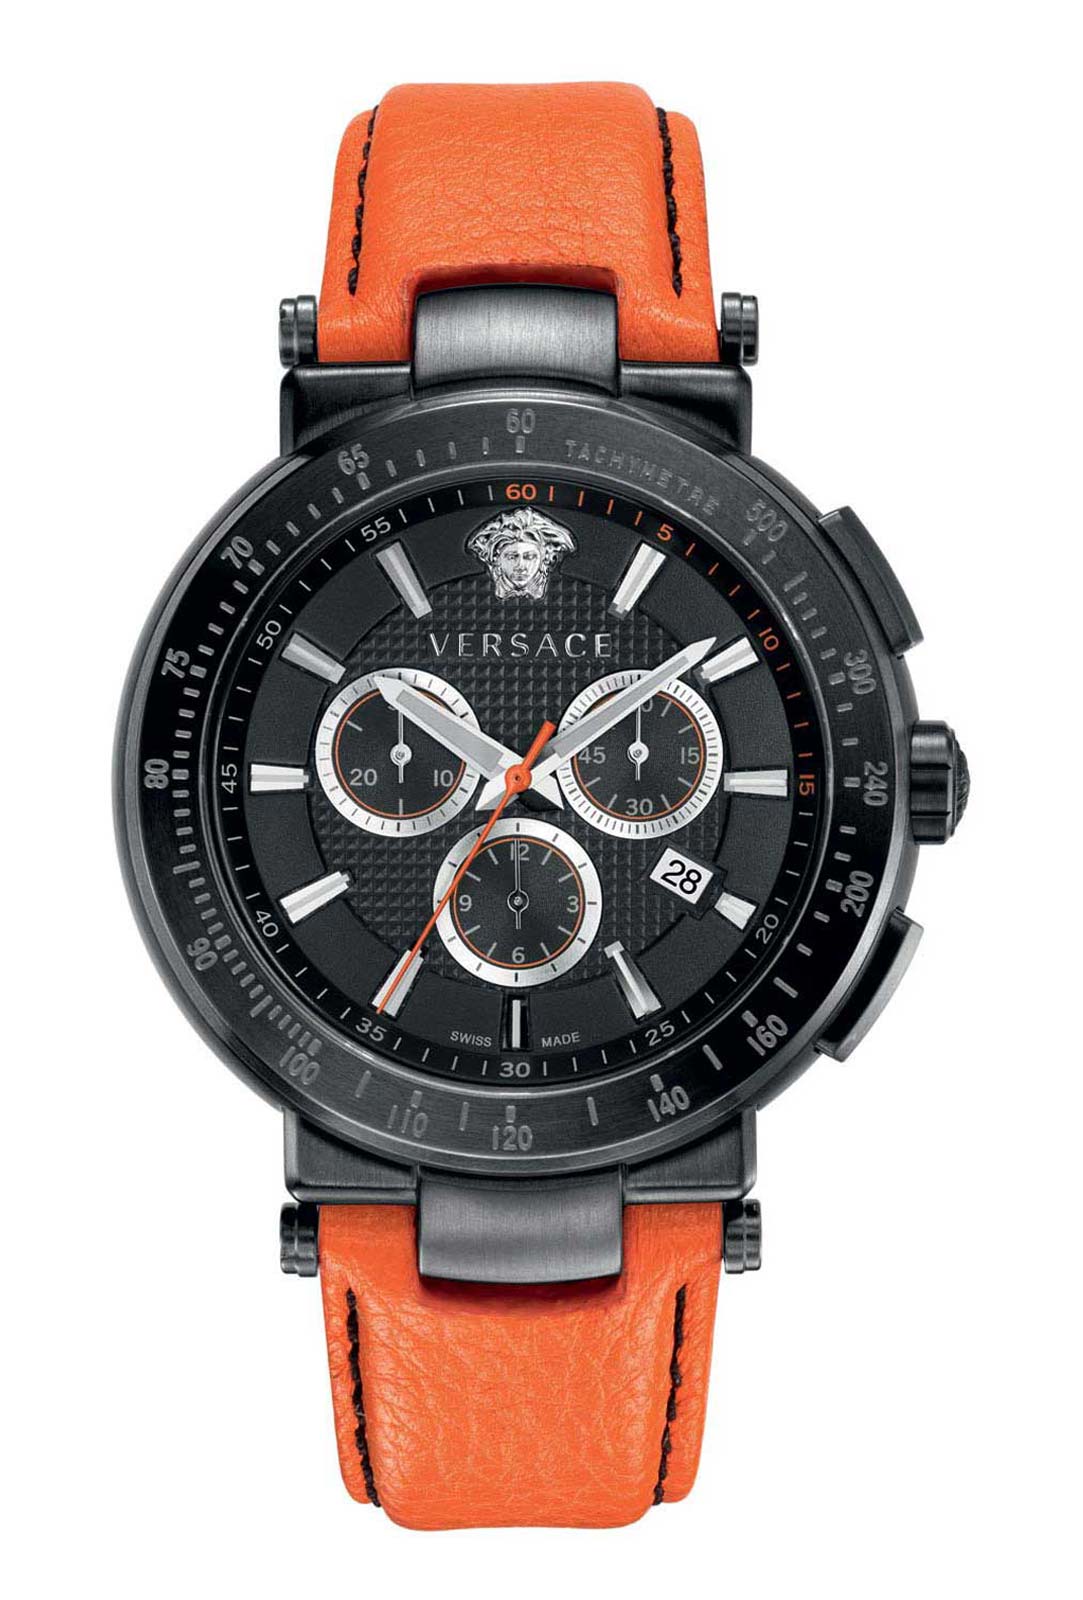 Versace QUARTZ CHRONO watch 5030D STEEL BLACK